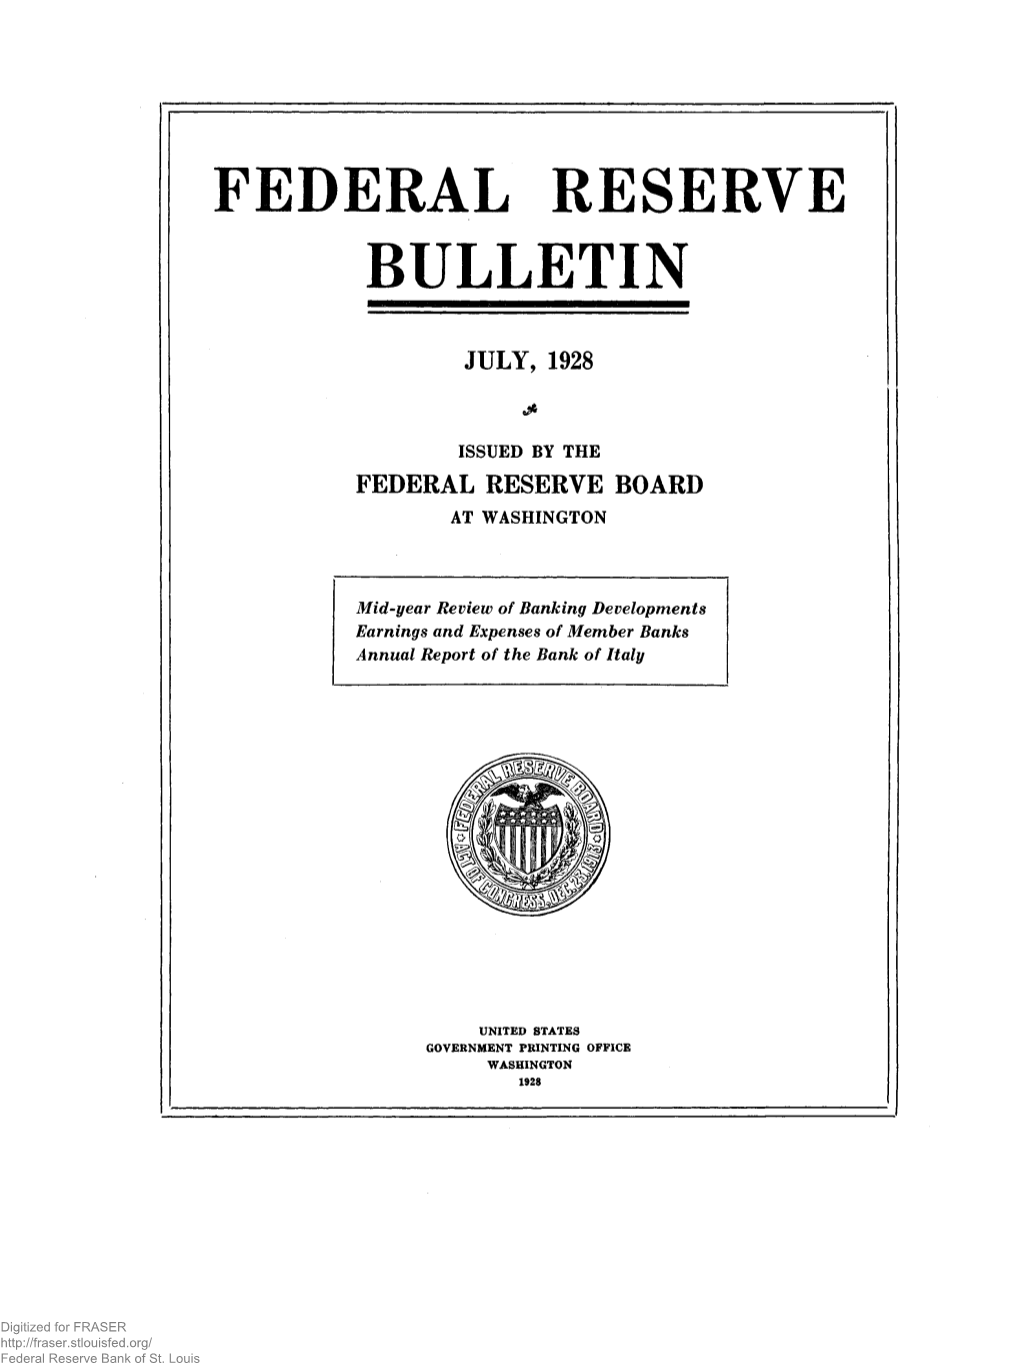 Federal Reserve Bulletin July 1928